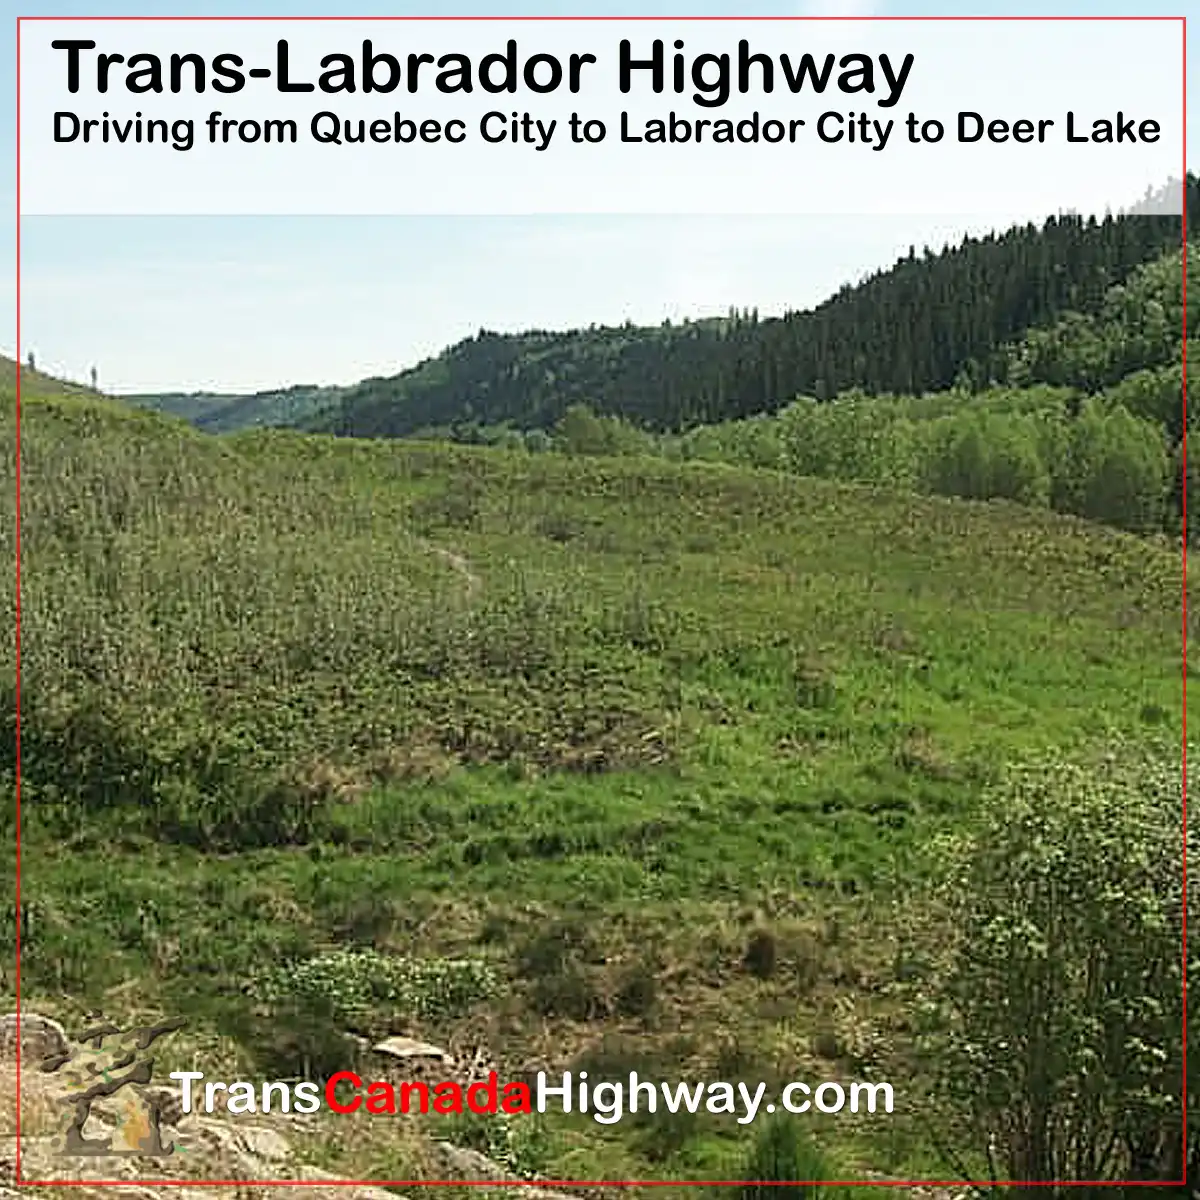 Trans-Labrador Highway Route